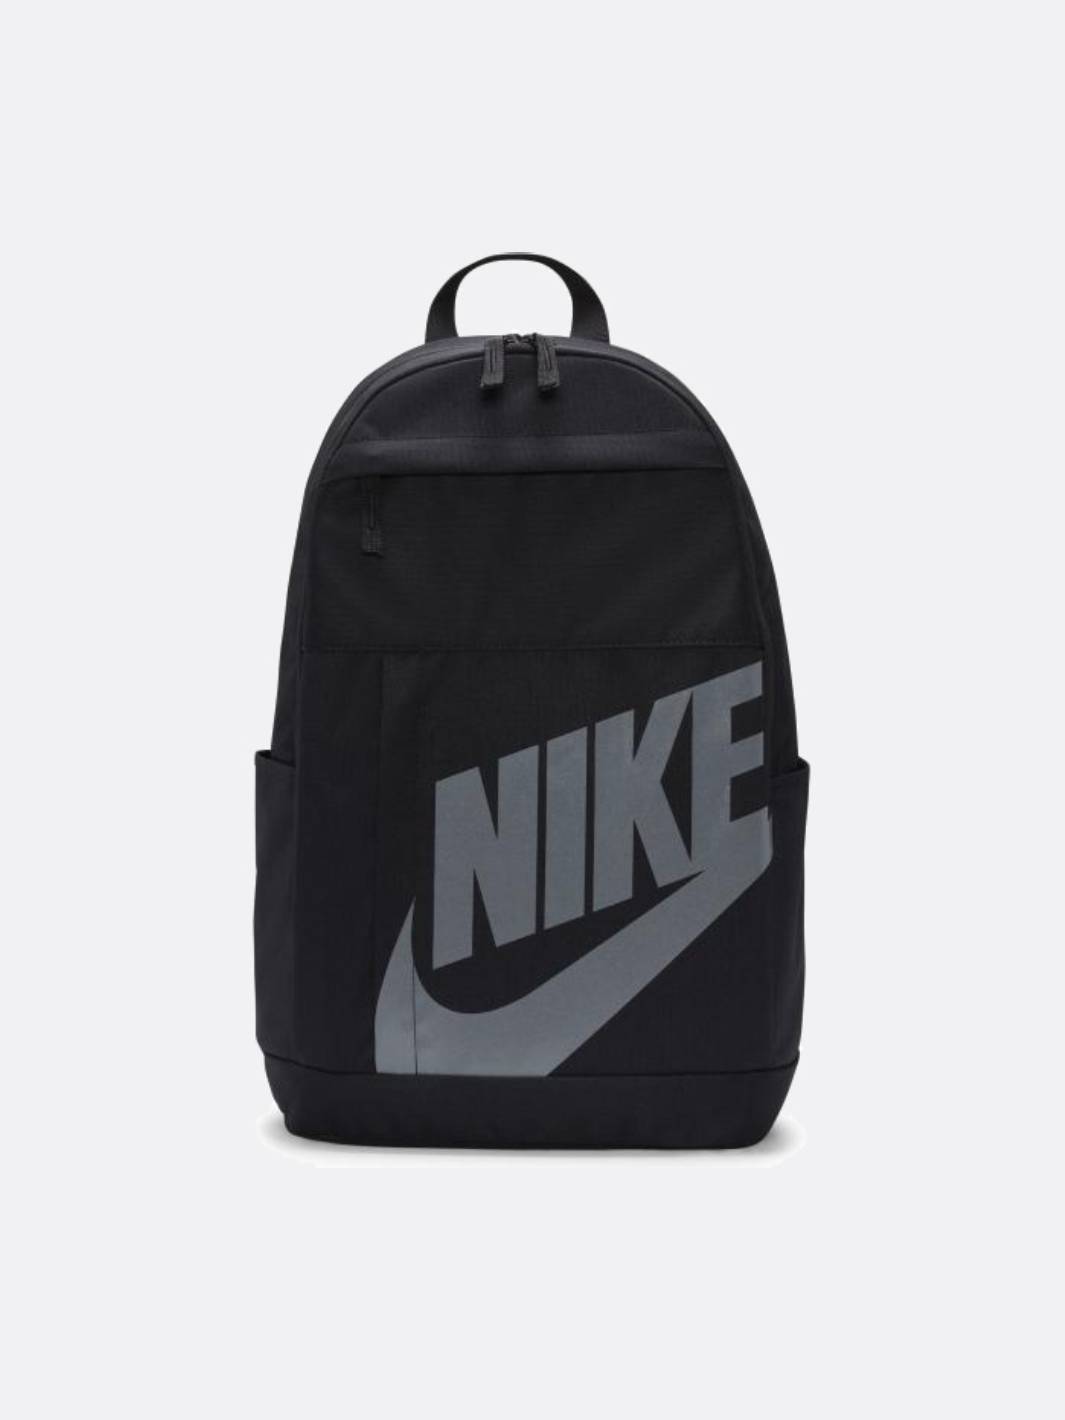 Nike - - Elemental Backpack - Black/Reflective Nohble